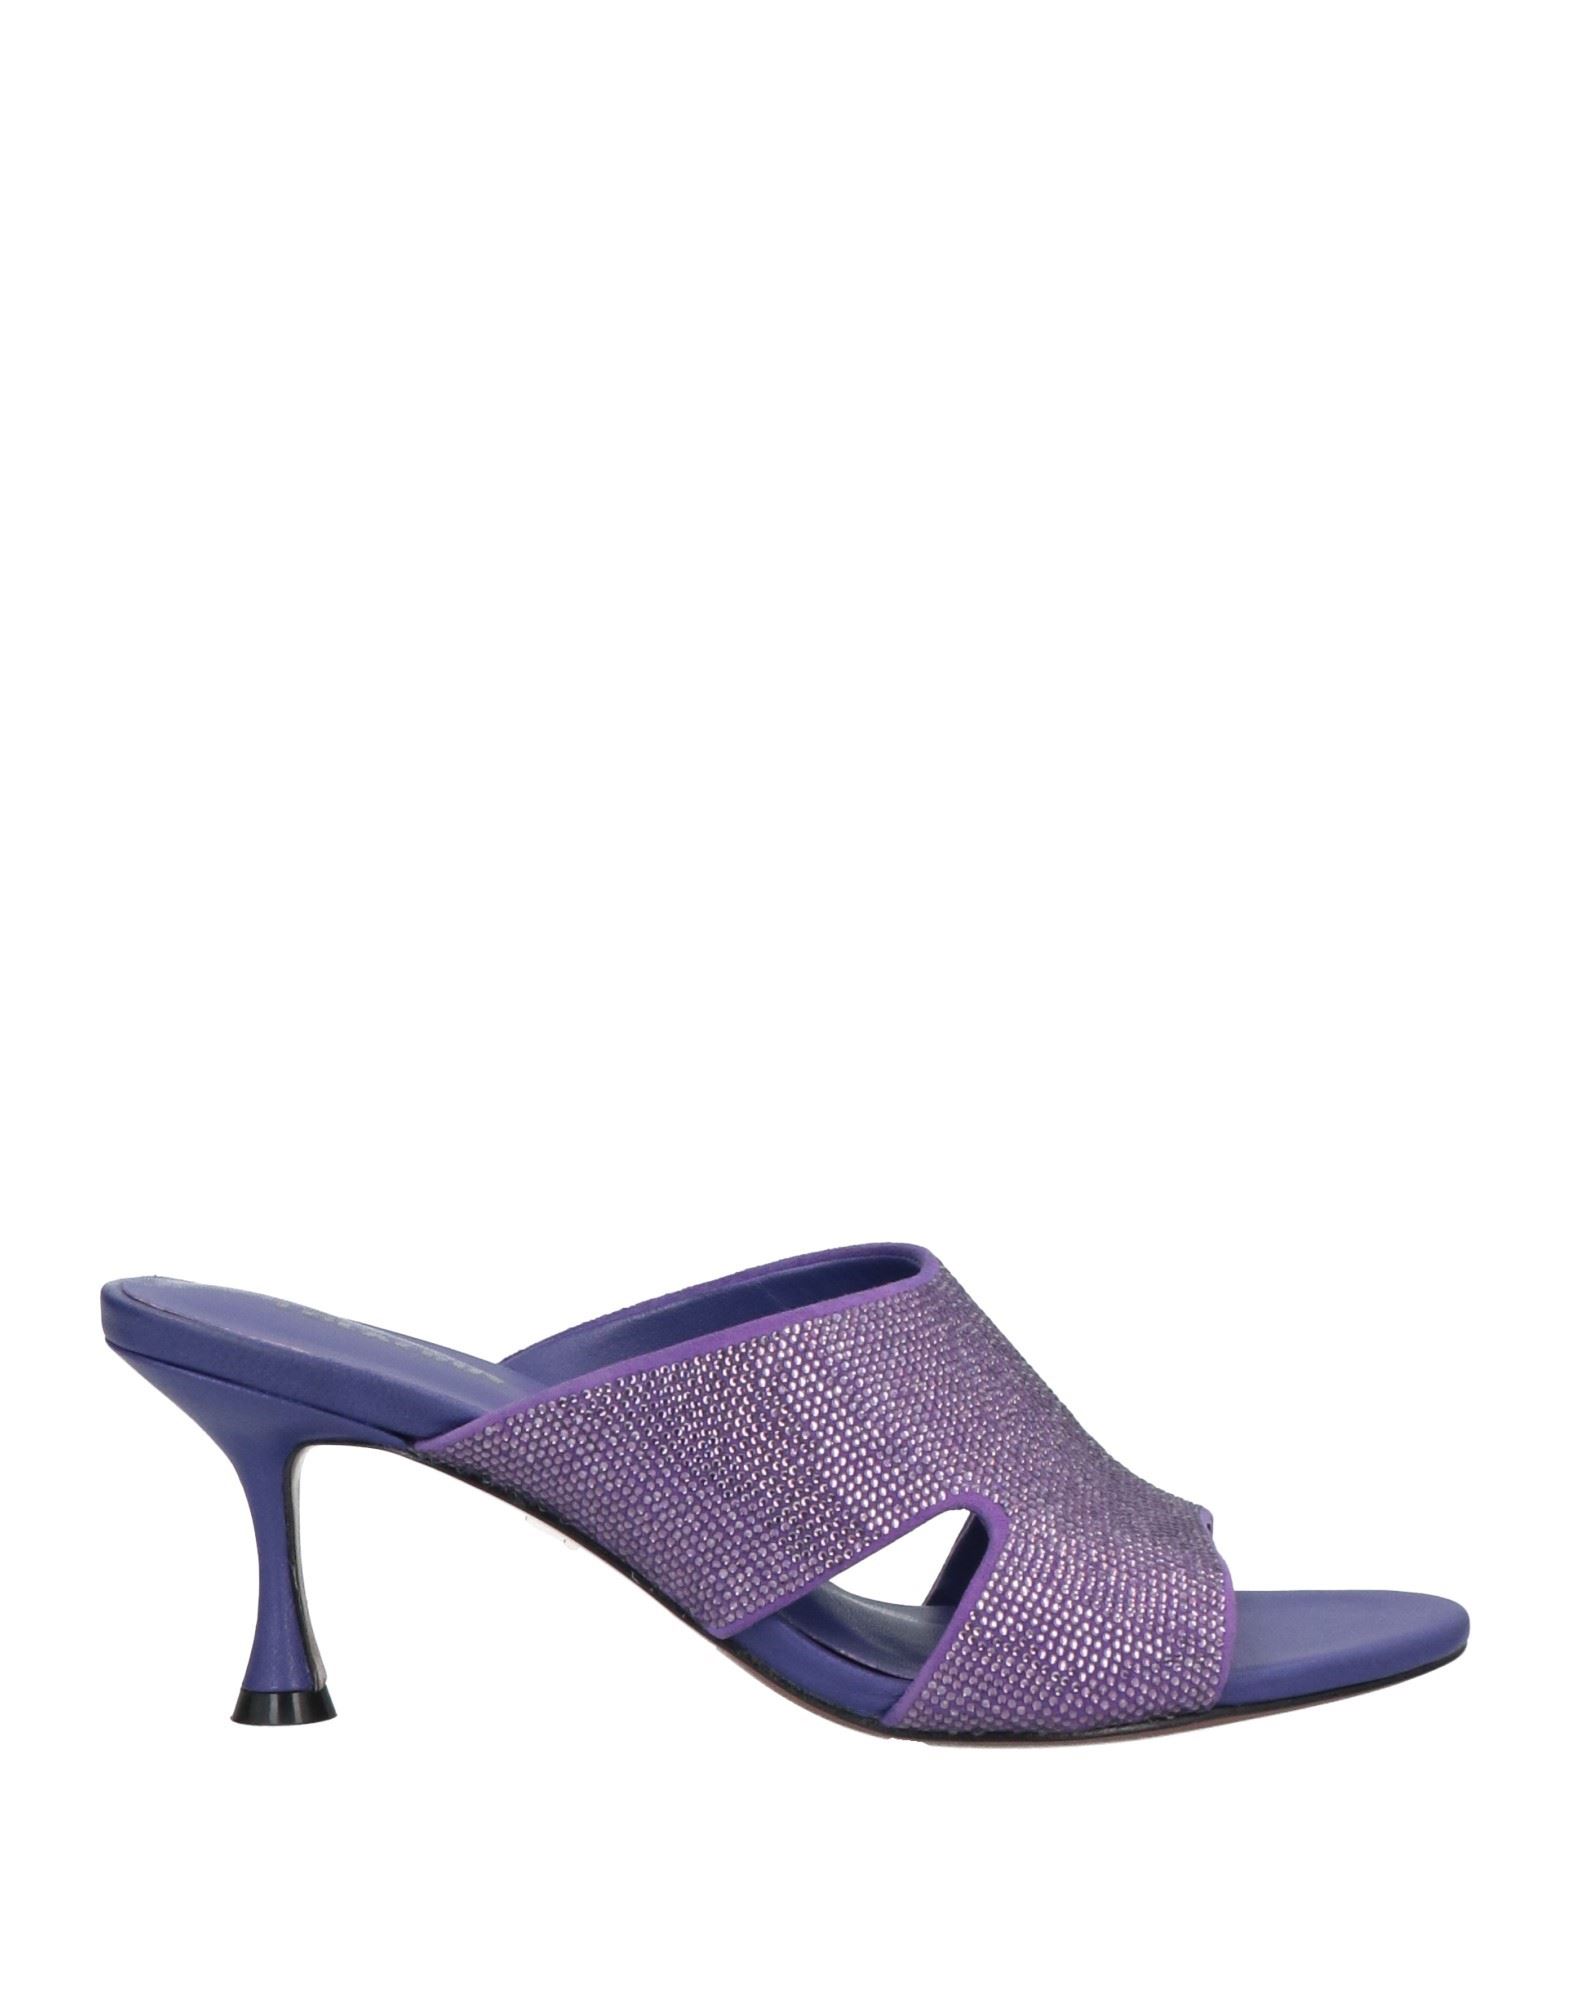 Lola Cruz Sandals In Purple